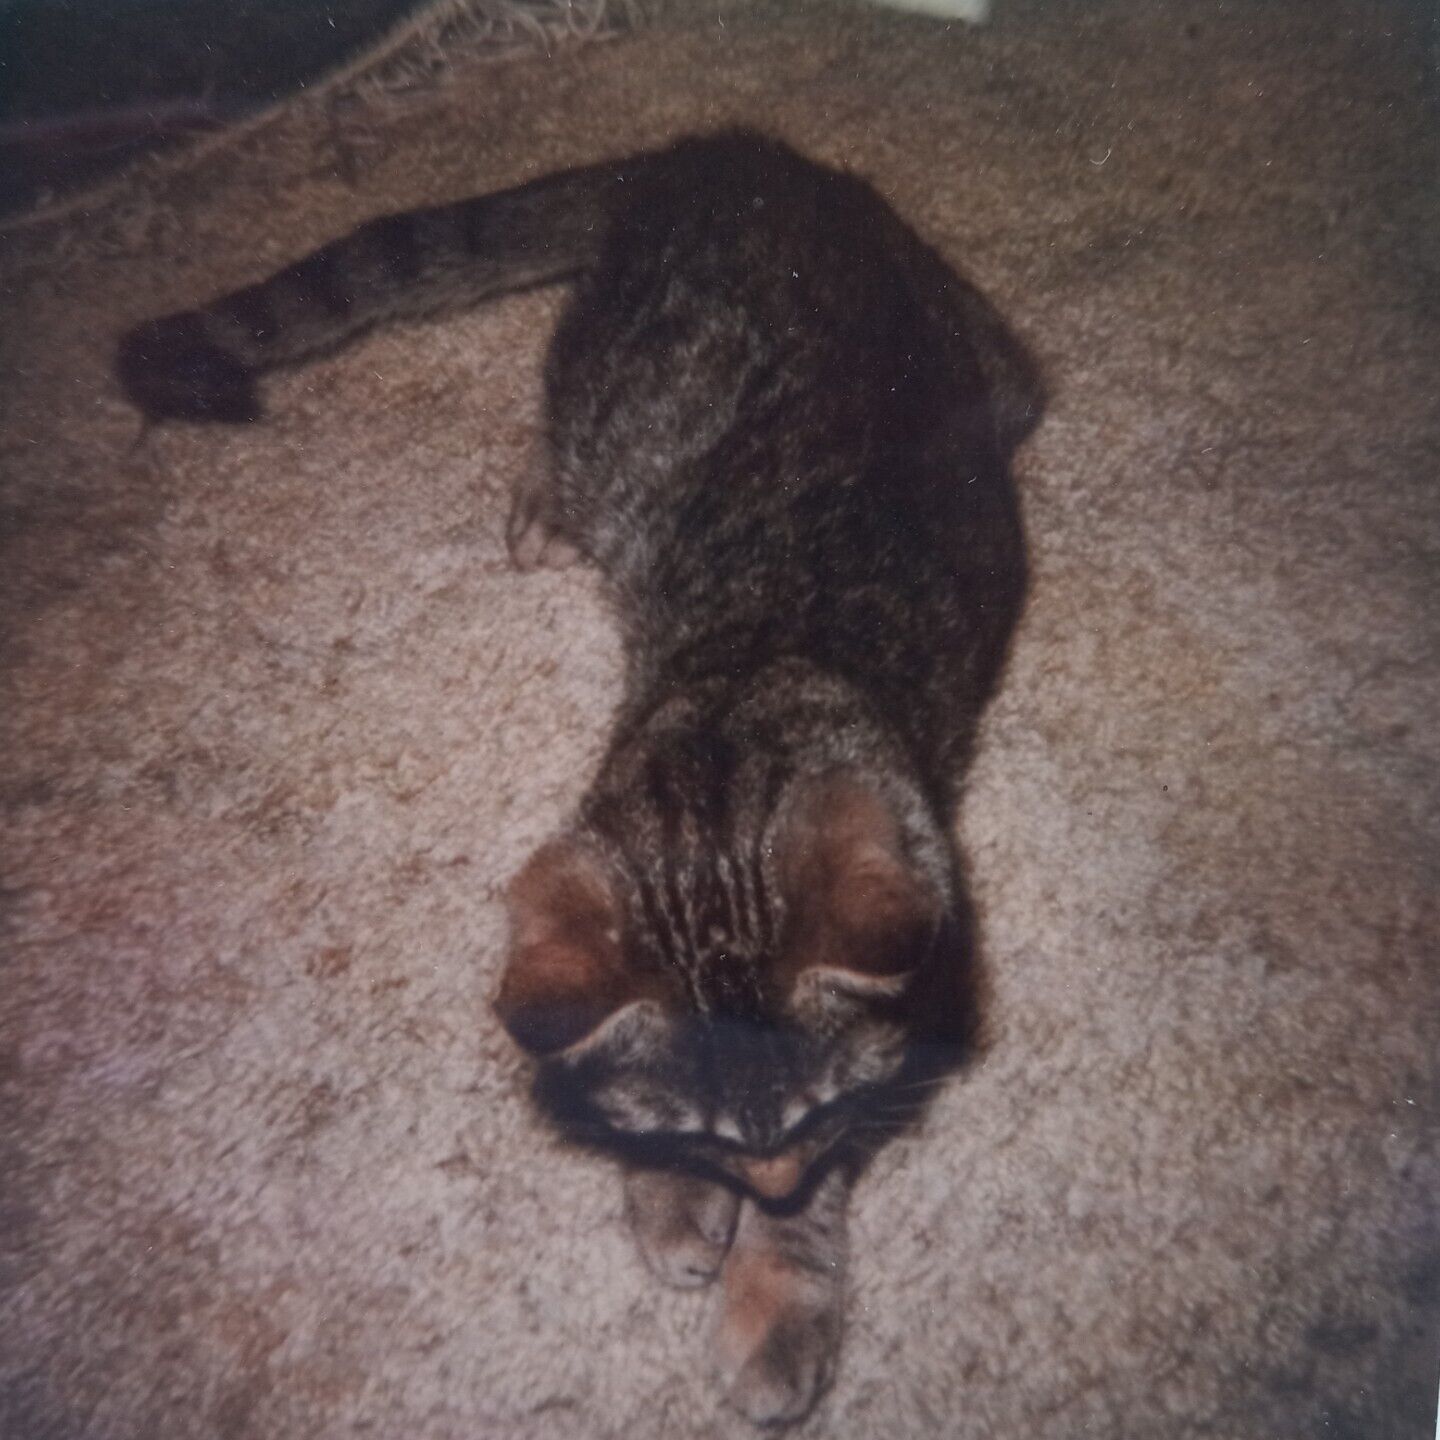 Vintage Polaroid Photo Adorable Cat Kitten On Carpet Cute Pet Found Art Snapshot